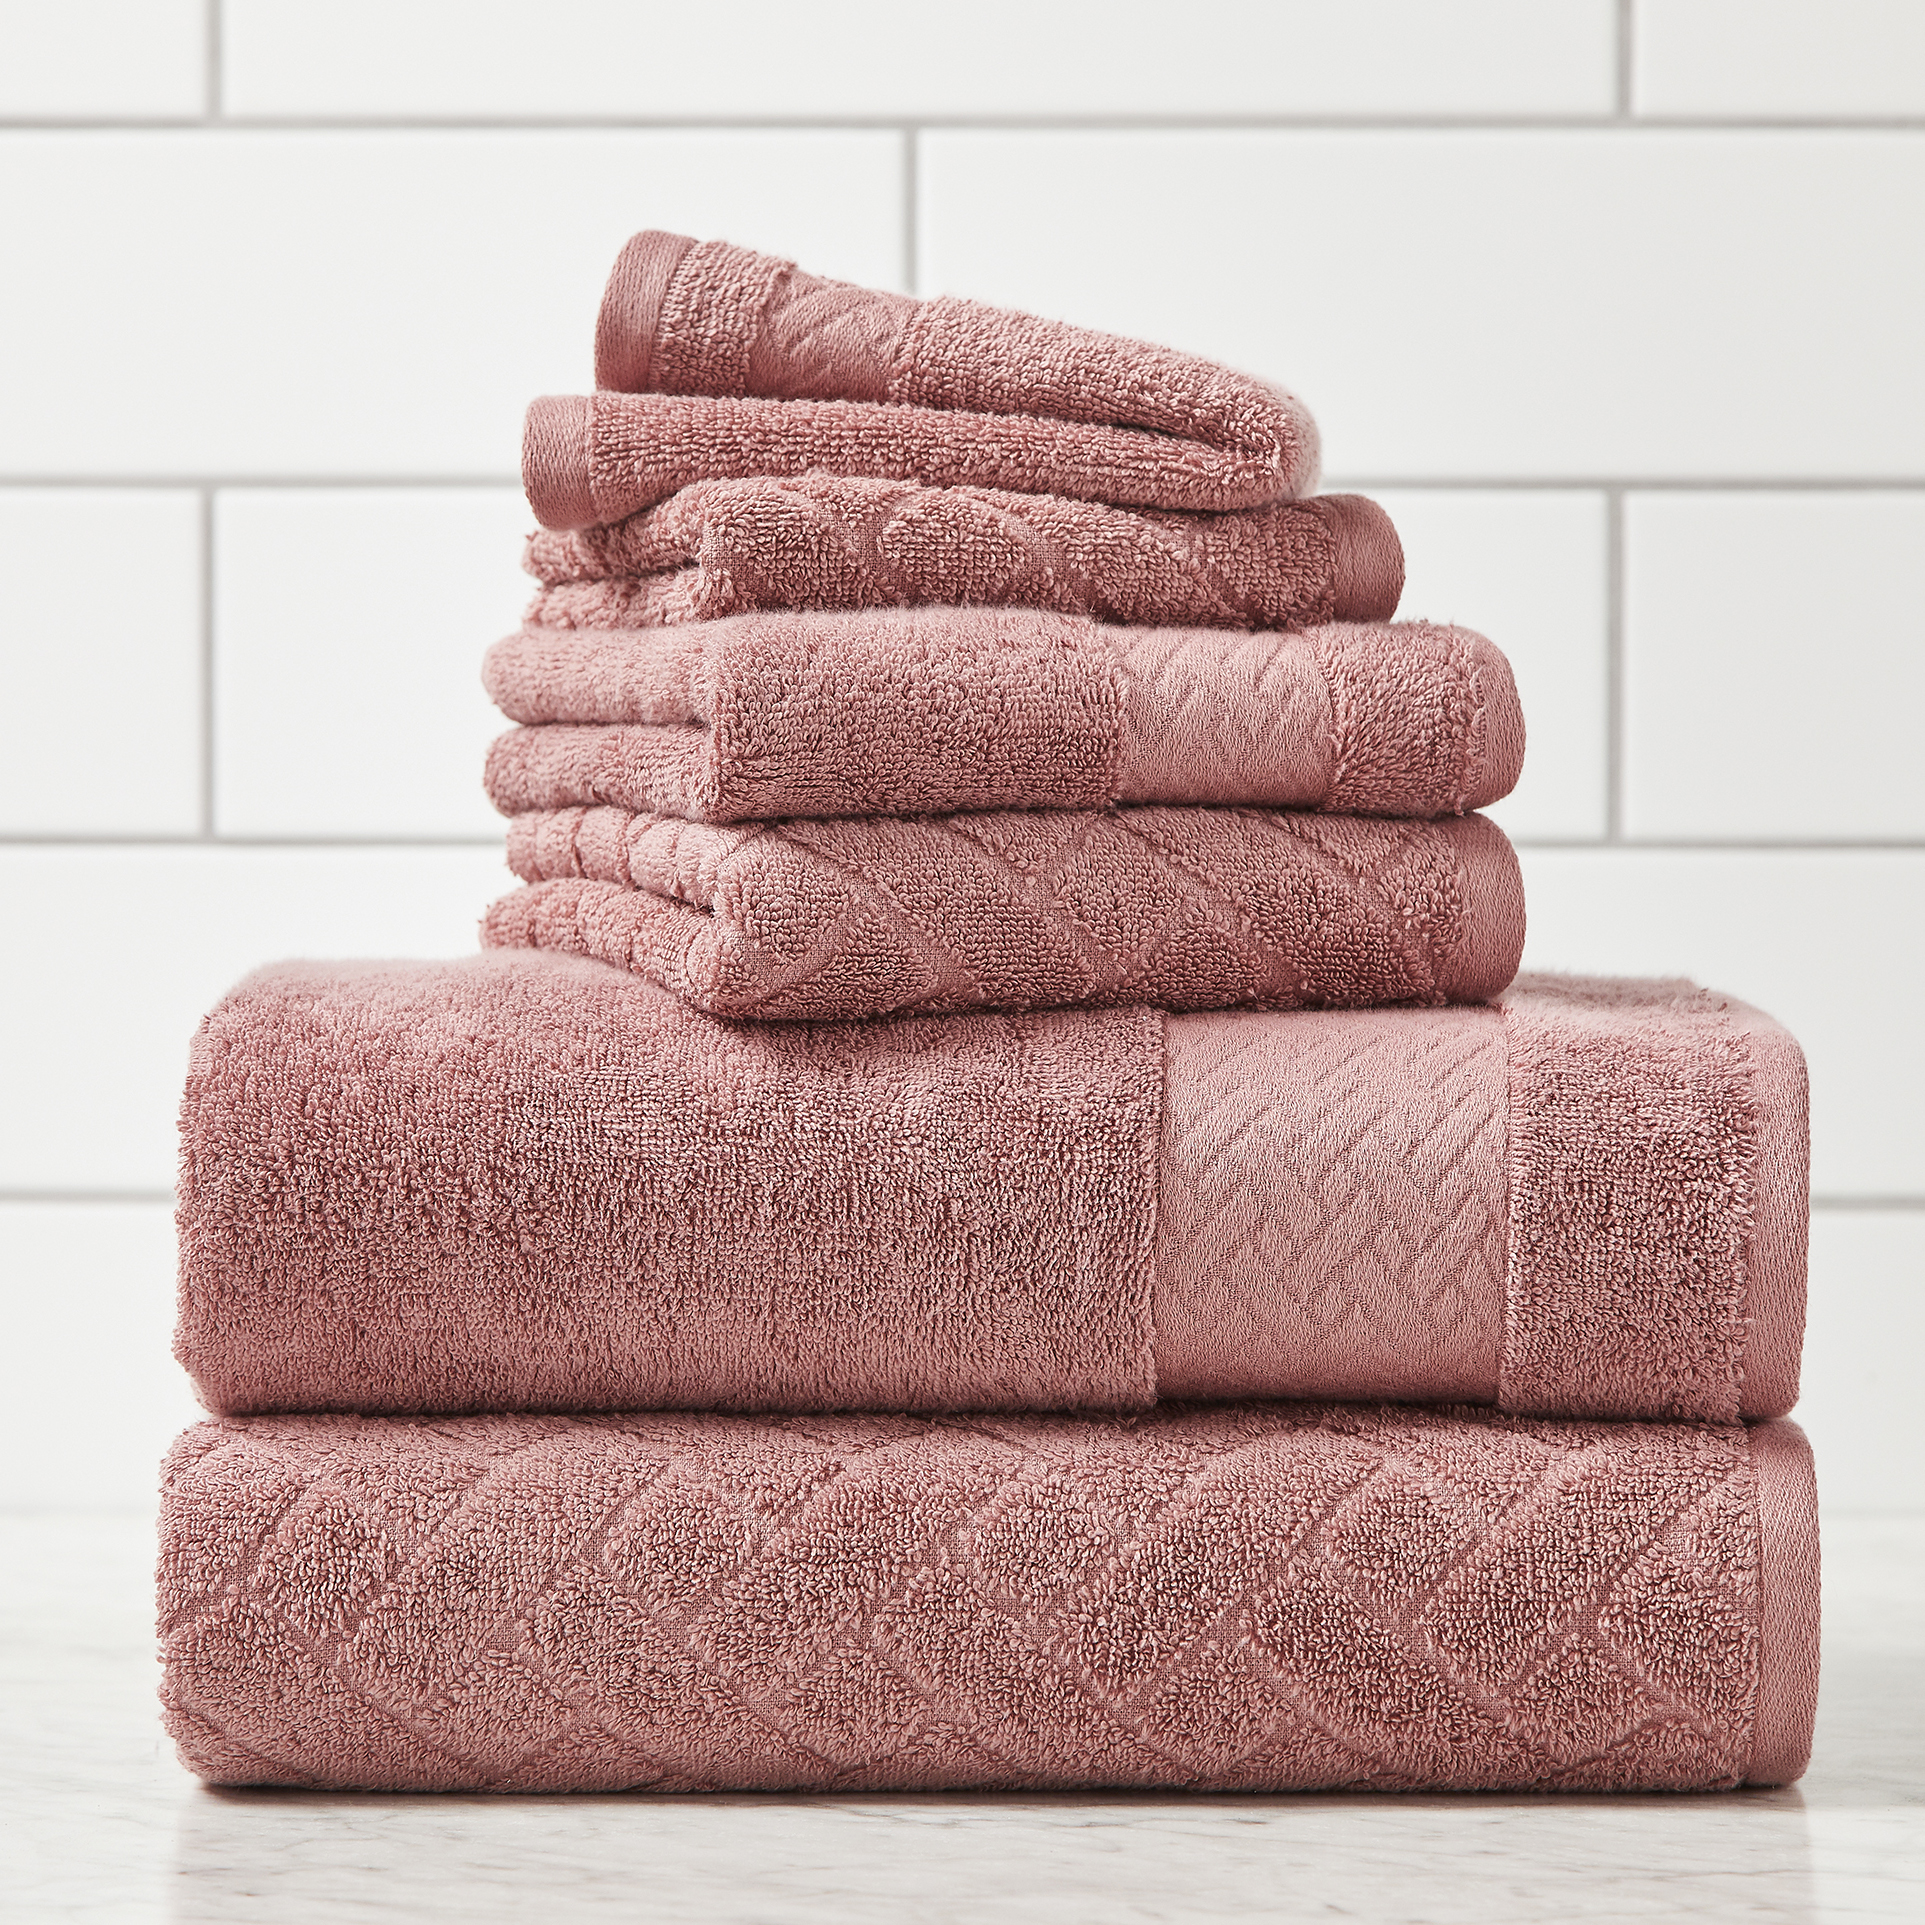 Better Homes & Gardens Wicker Jacquard 6 Piece Bath Towel Set, Ash Rose - image 1 of 4